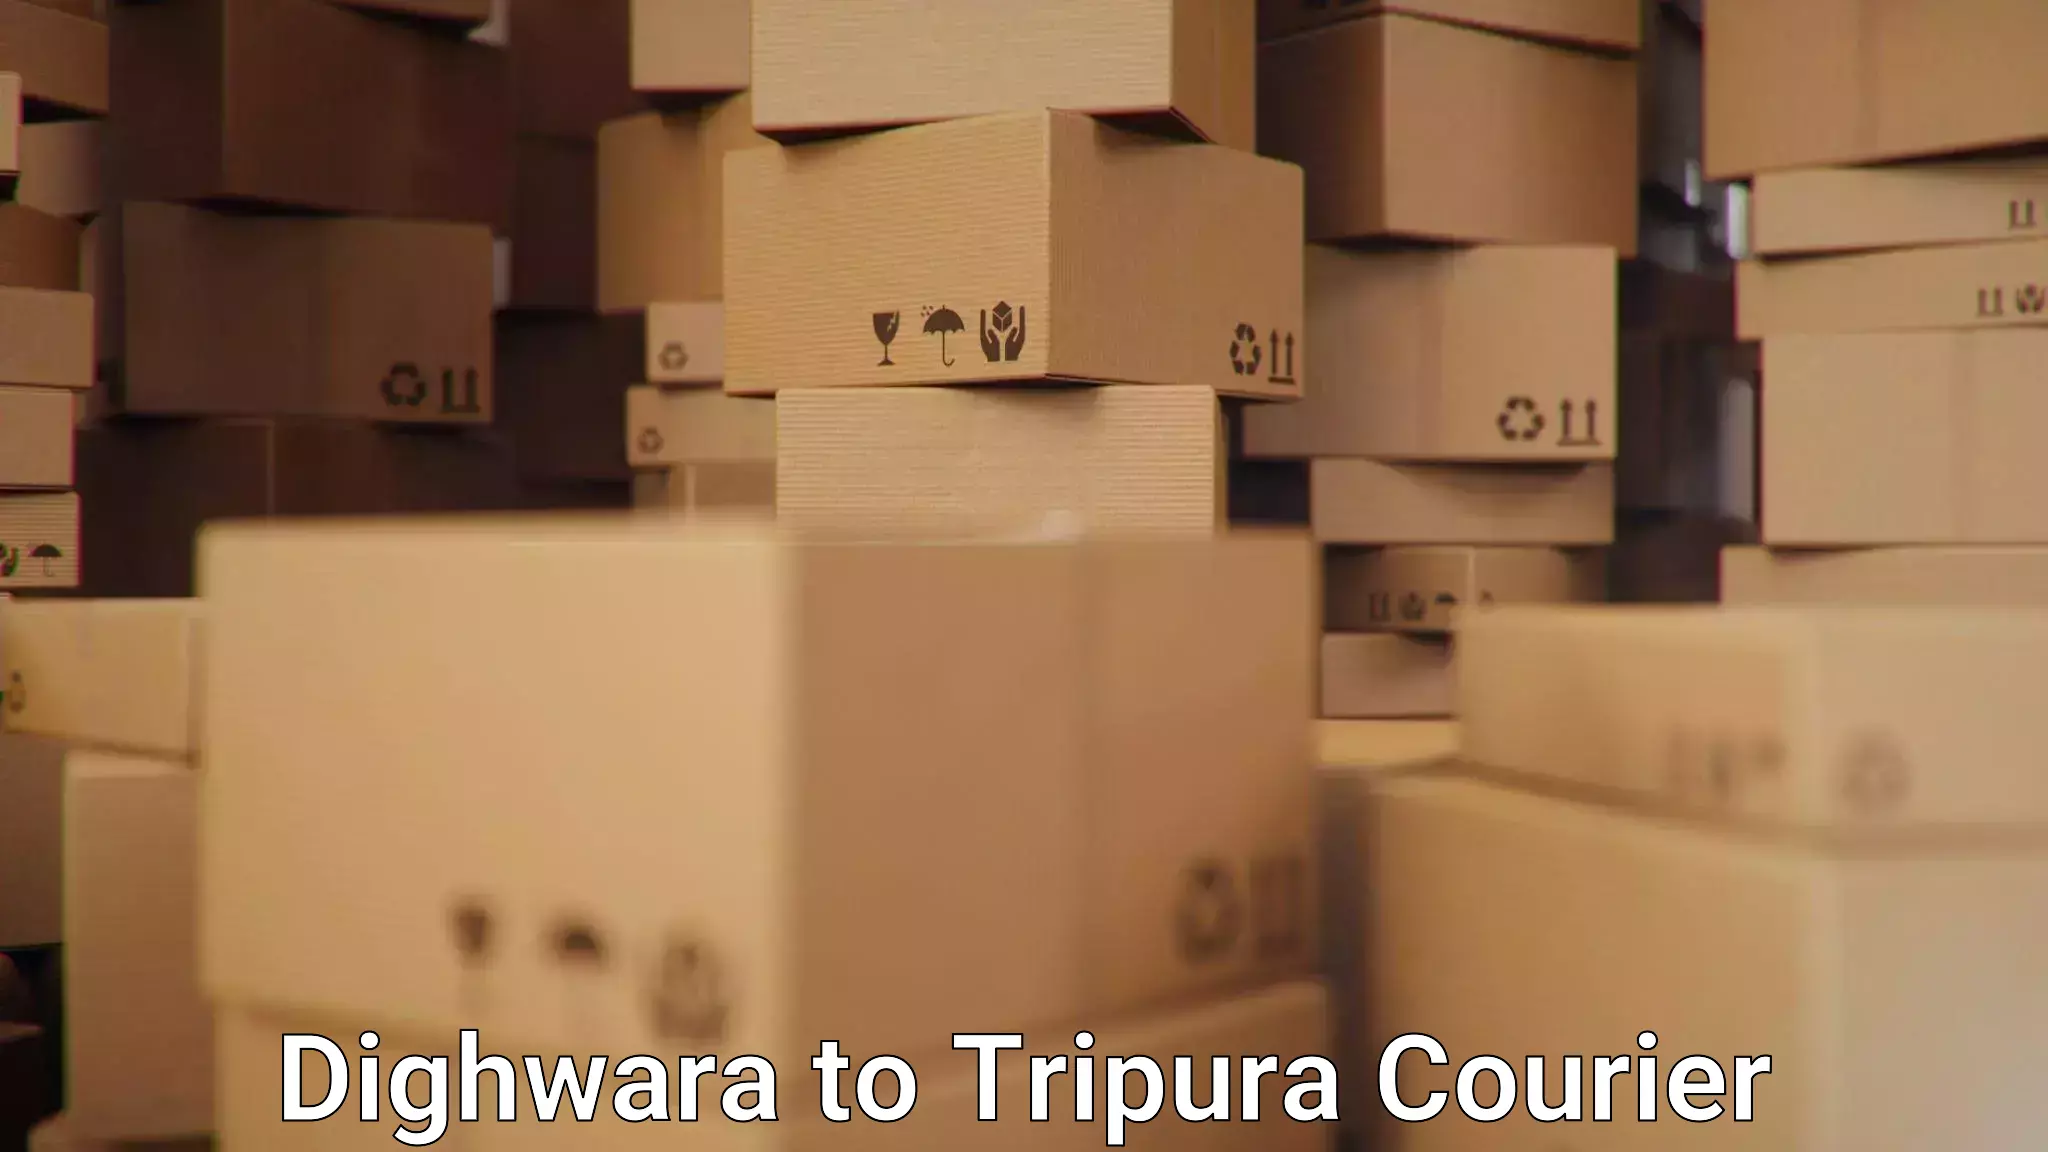 Express courier facilities Dighwara to Udaipur Tripura